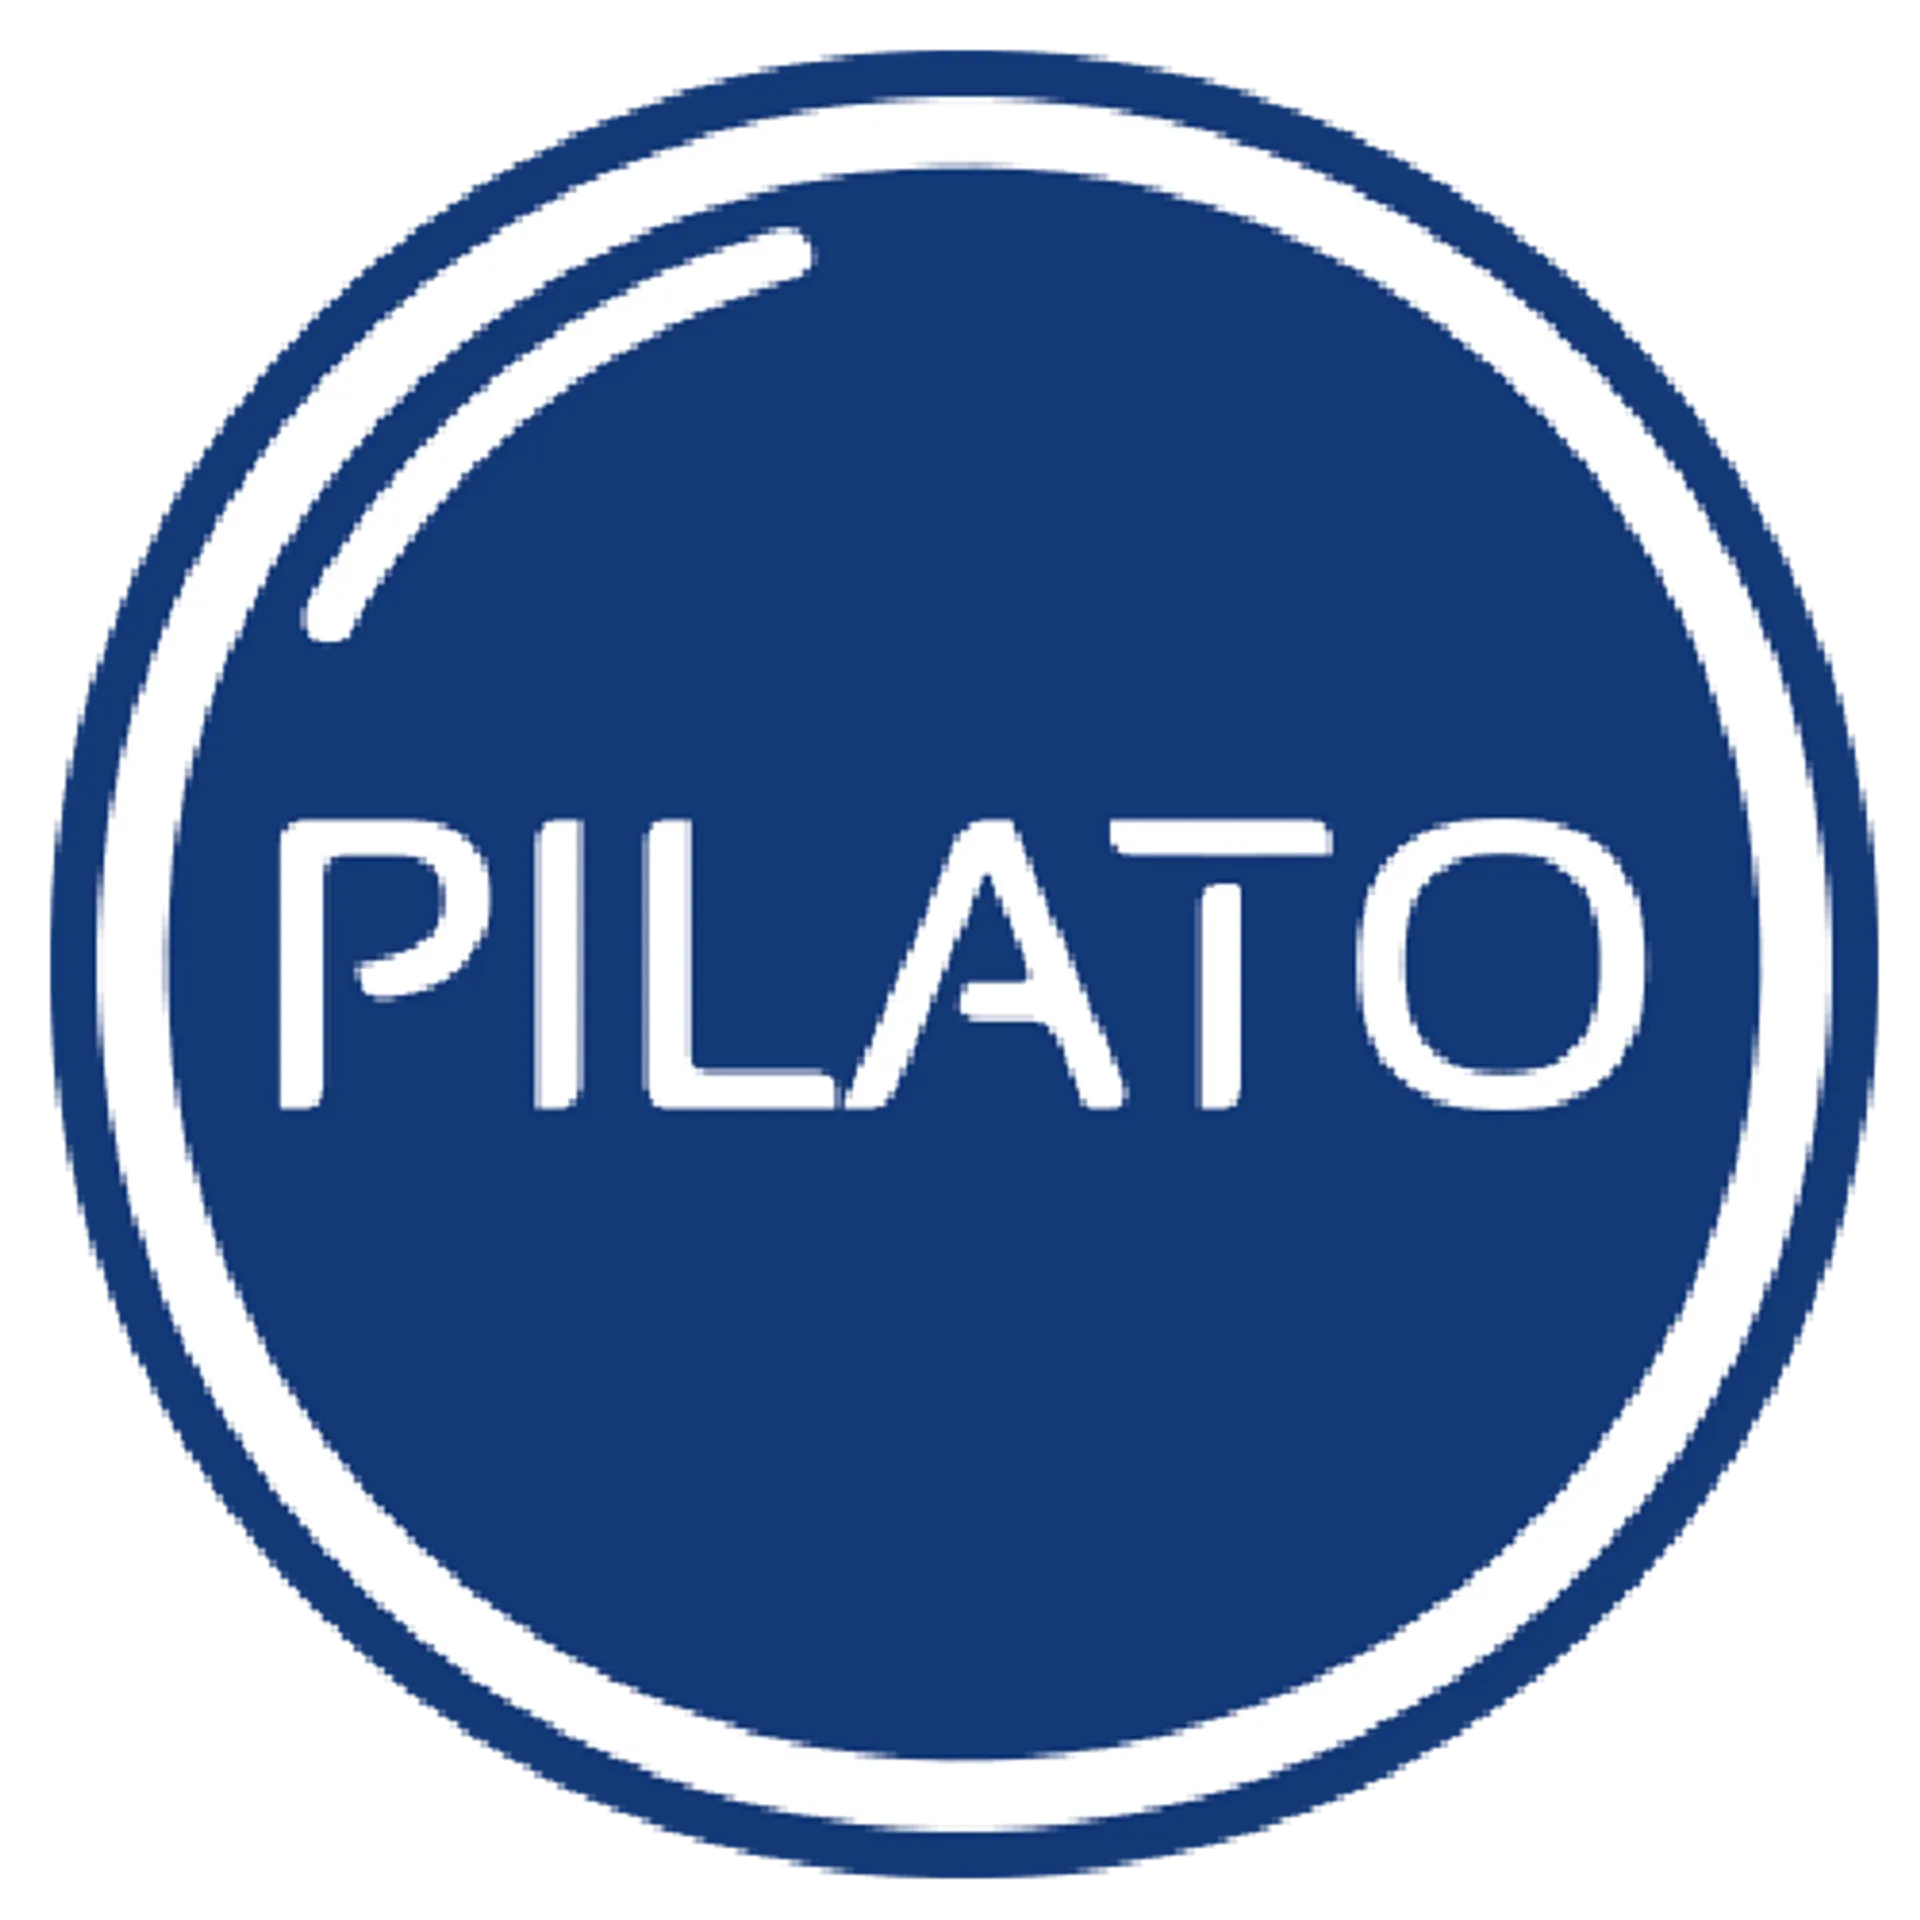 PILATO logo